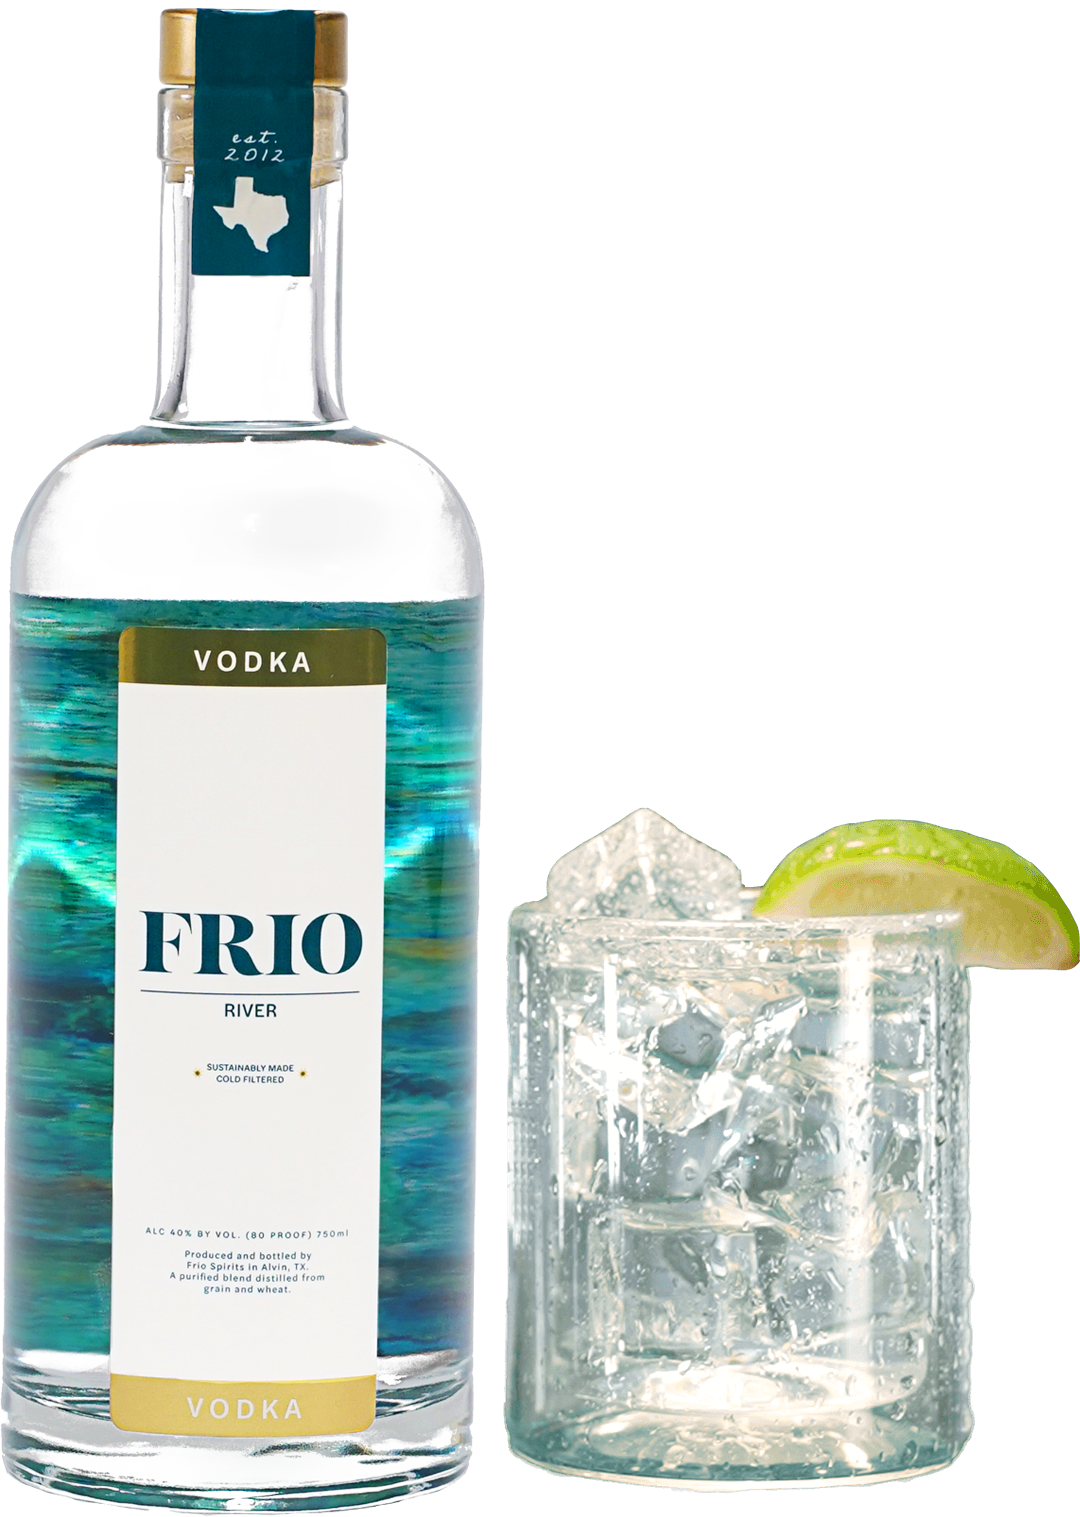 Frio Vodka Bottle with a Vodka Cocktail